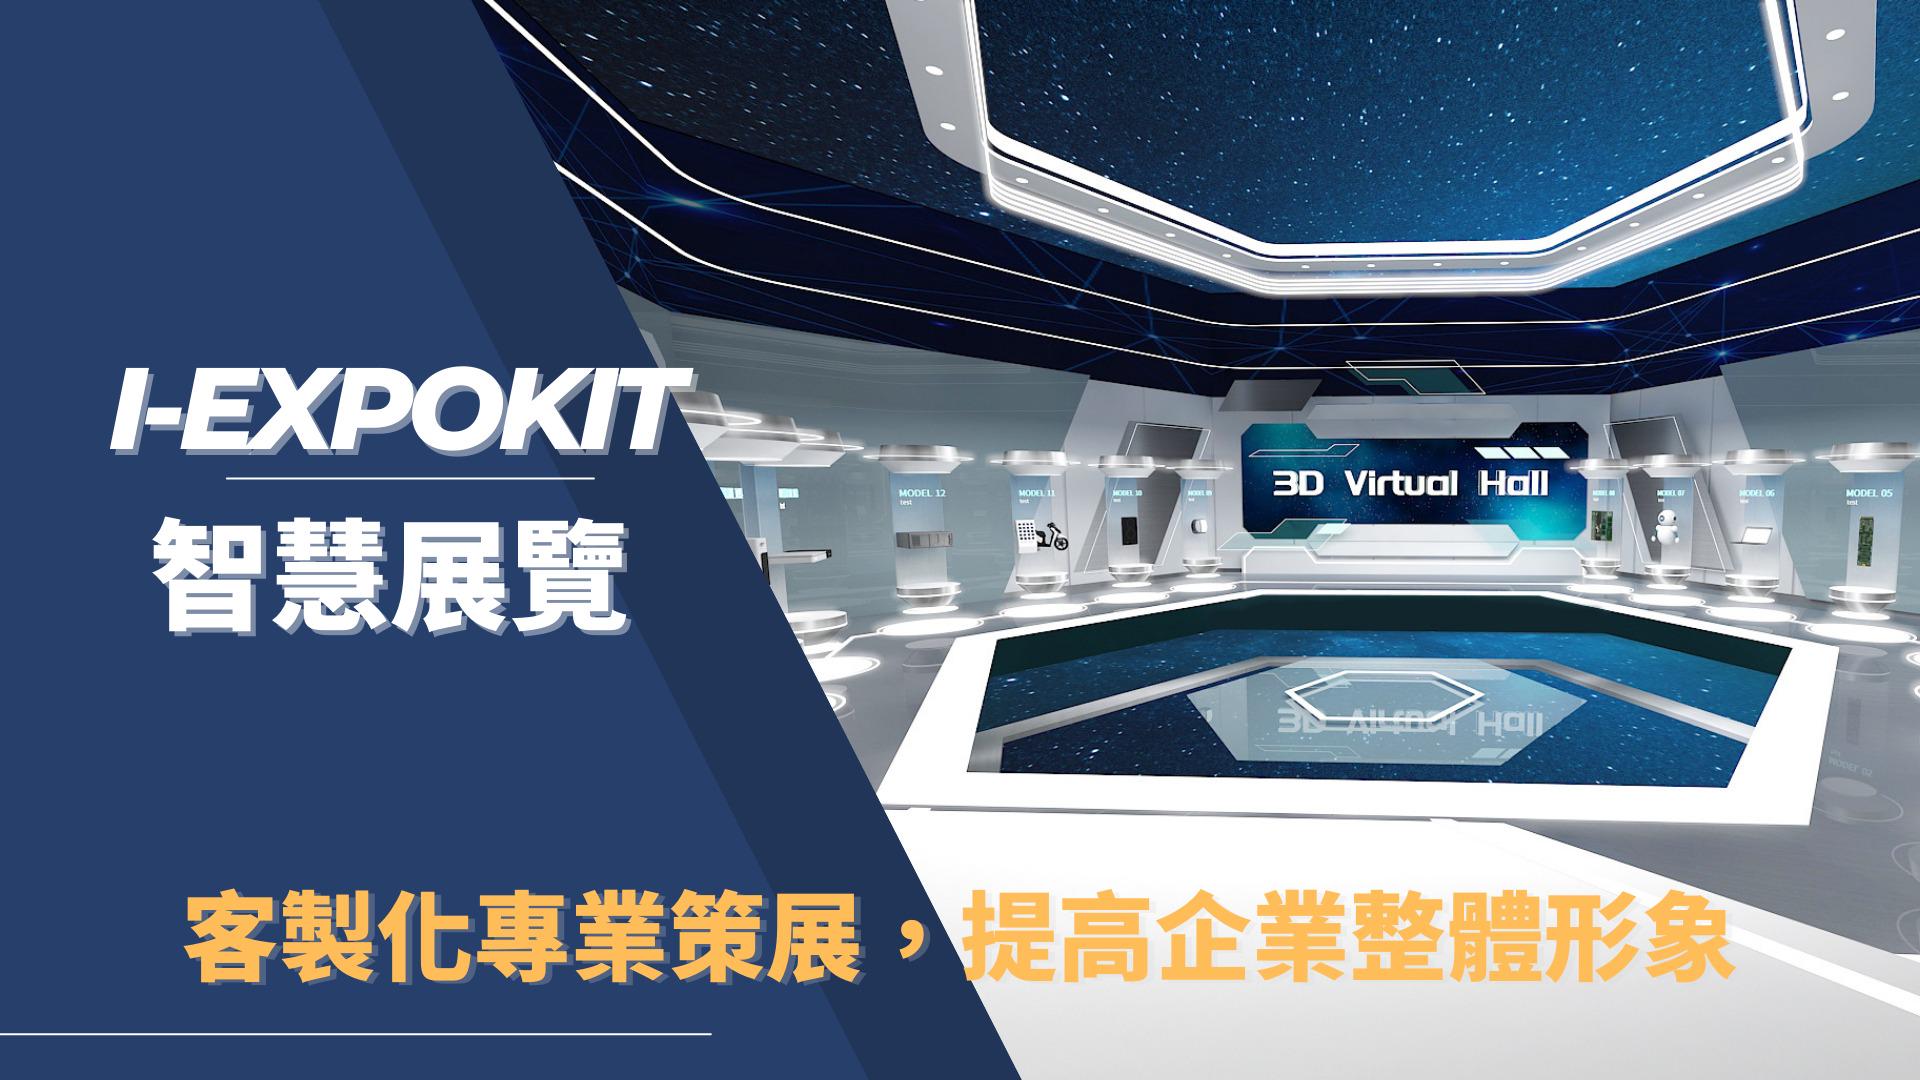 i-ExpoKit 智慧展览, 线上展览, 工研院, 创博会, 台湾创新博览会2021, 王一设计